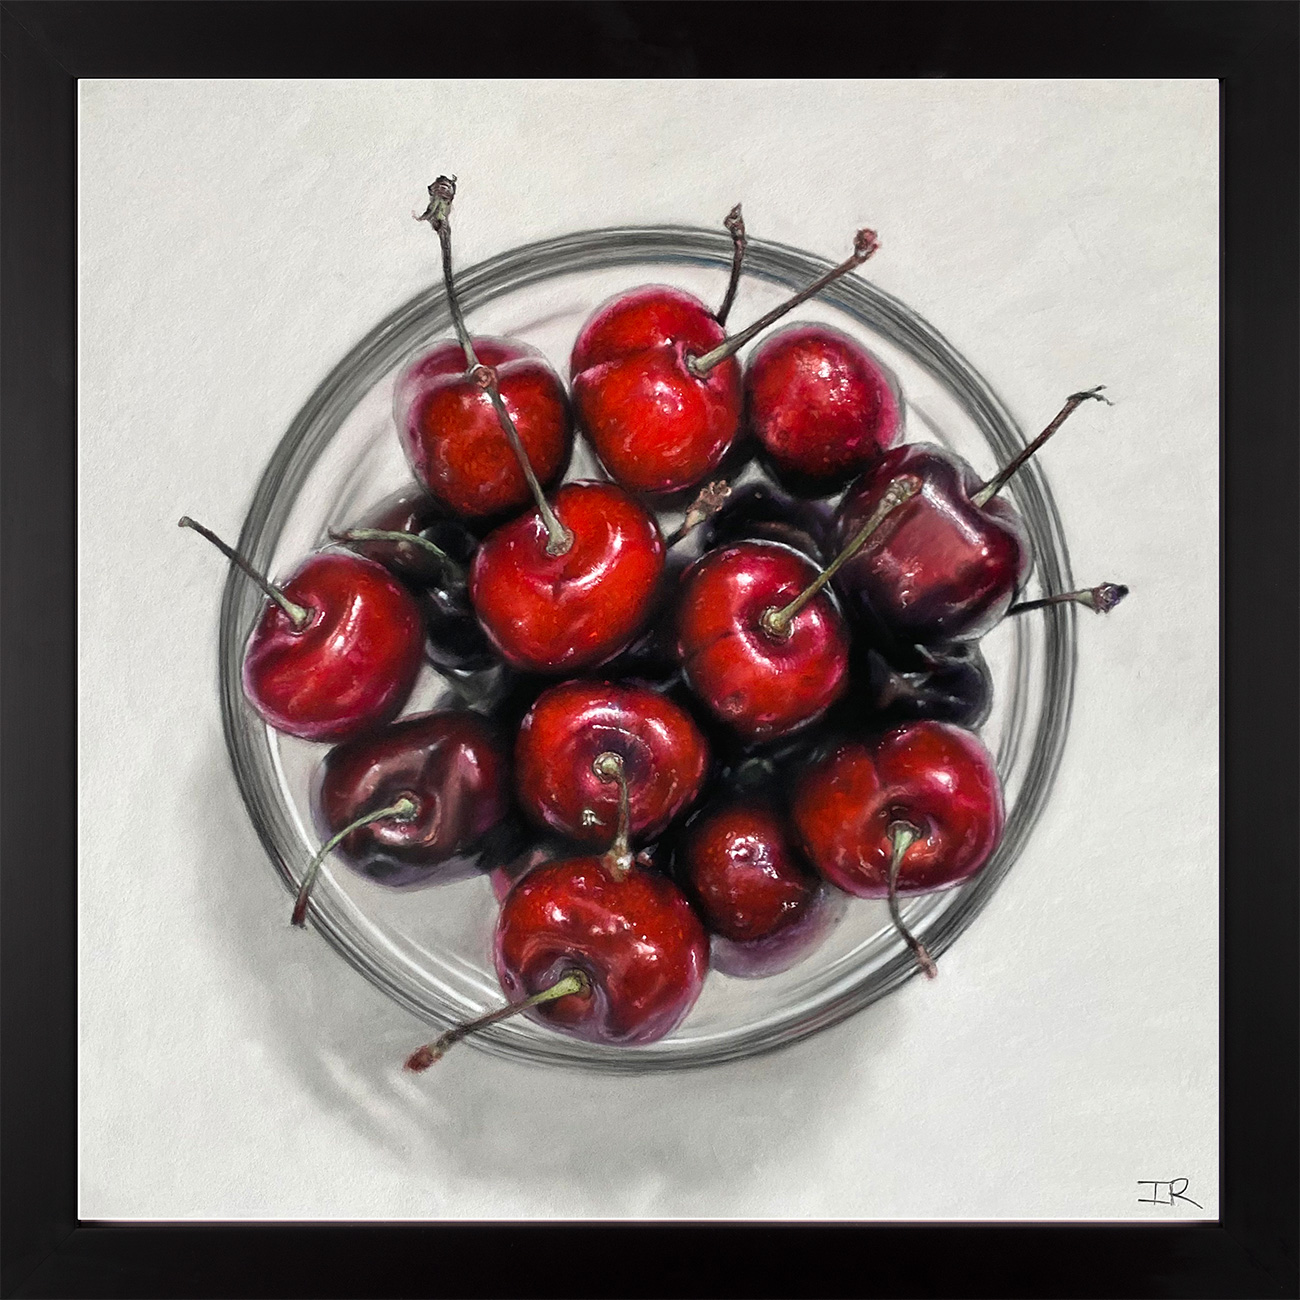 Ian Rawling, Pastel, Bowlful of Cherries, click to enlarge